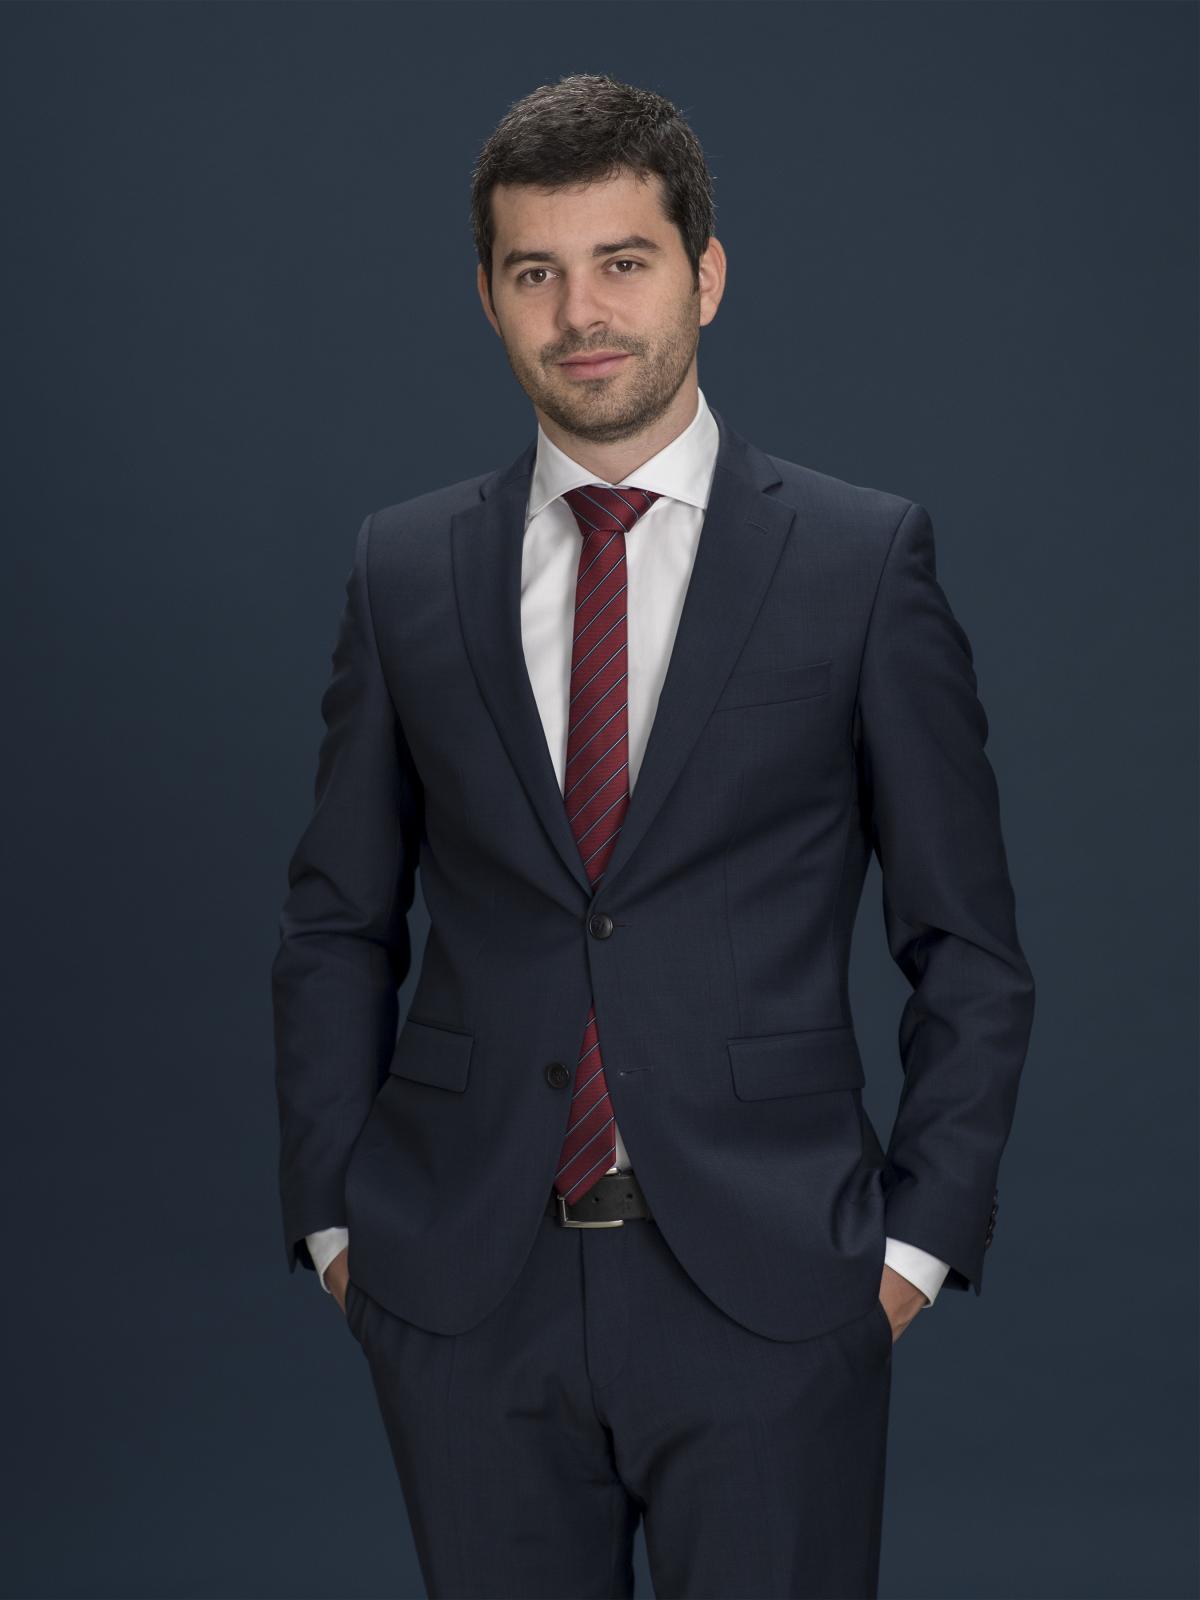 MLaw Matthias Meier - Rechtsanwalt